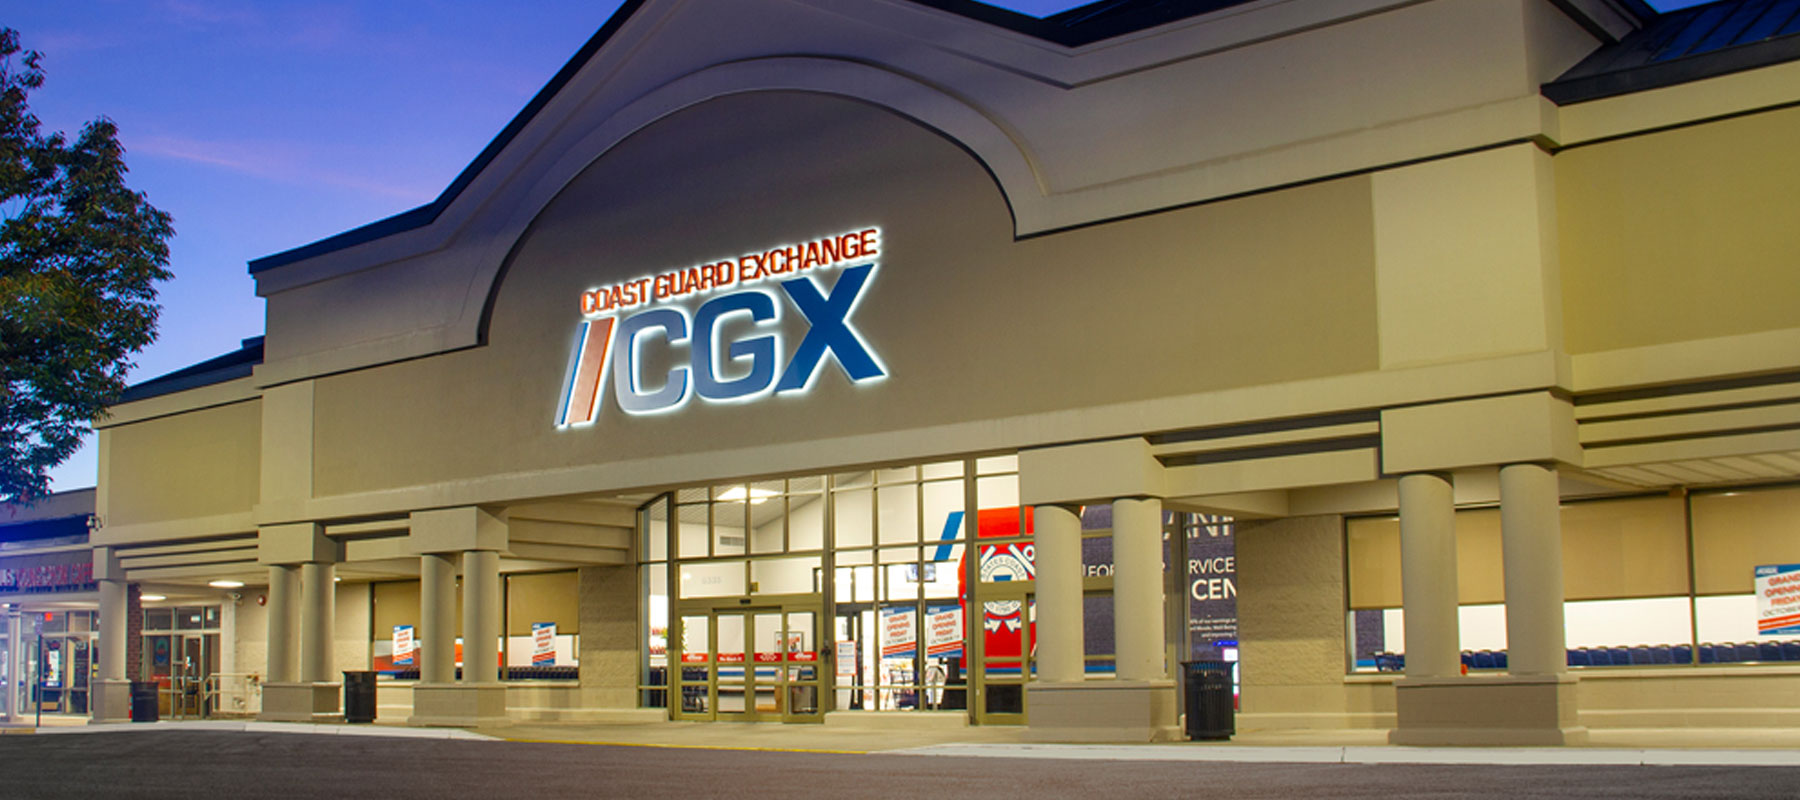 CGX storefront at night